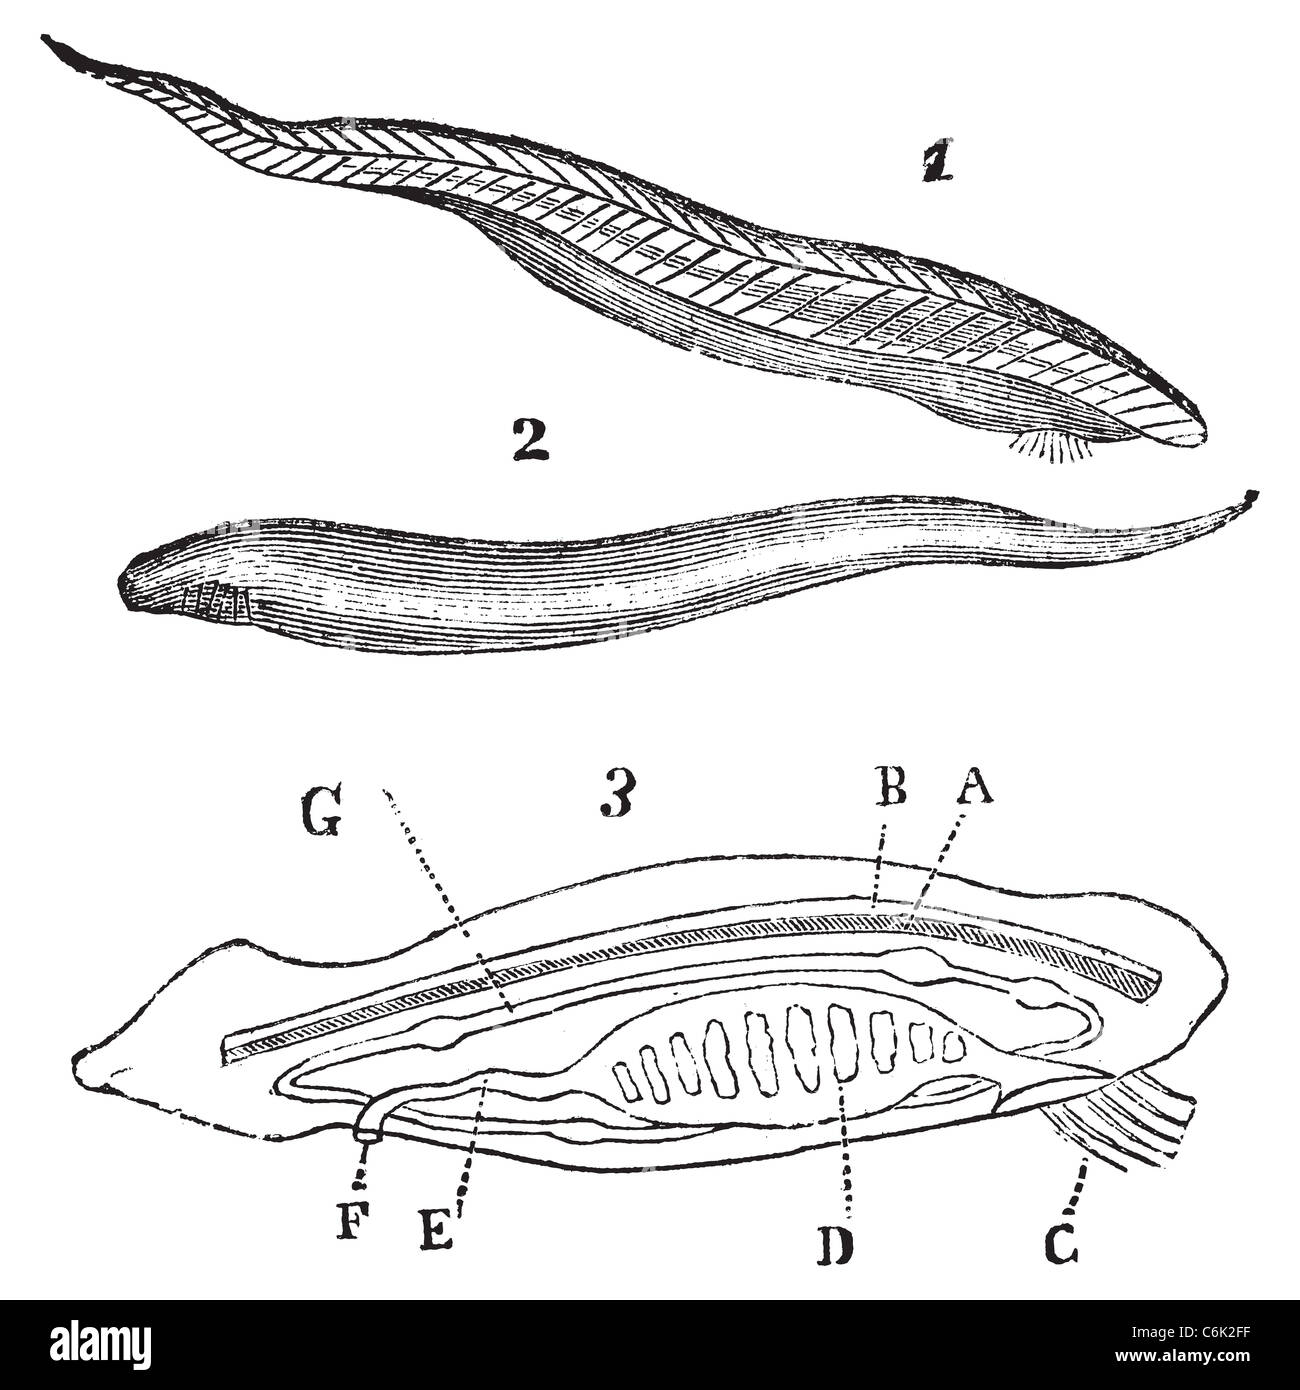 Lancelet ( amphioxus lanceolatus ) top, bottom and inside view vintage engraving. Information about vertabrate evolution. Stock Photo